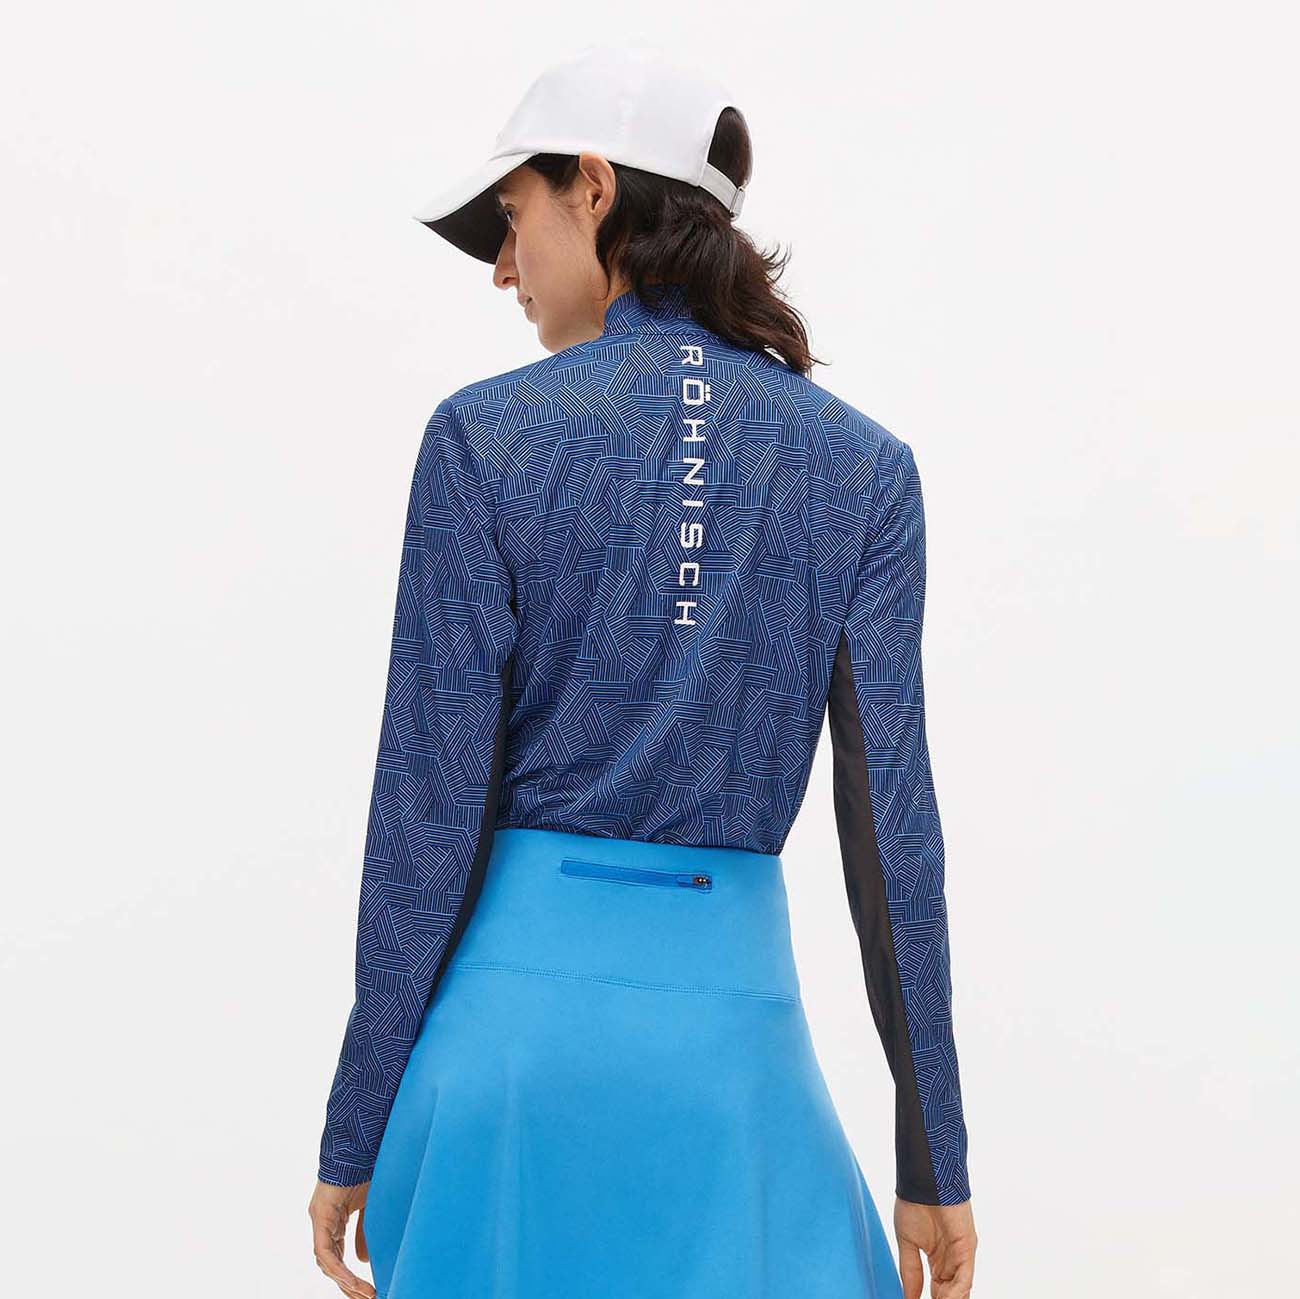 Rohnisch Women's Long Sleeve Printed Top with UPF 50+ in Hexagon Blue